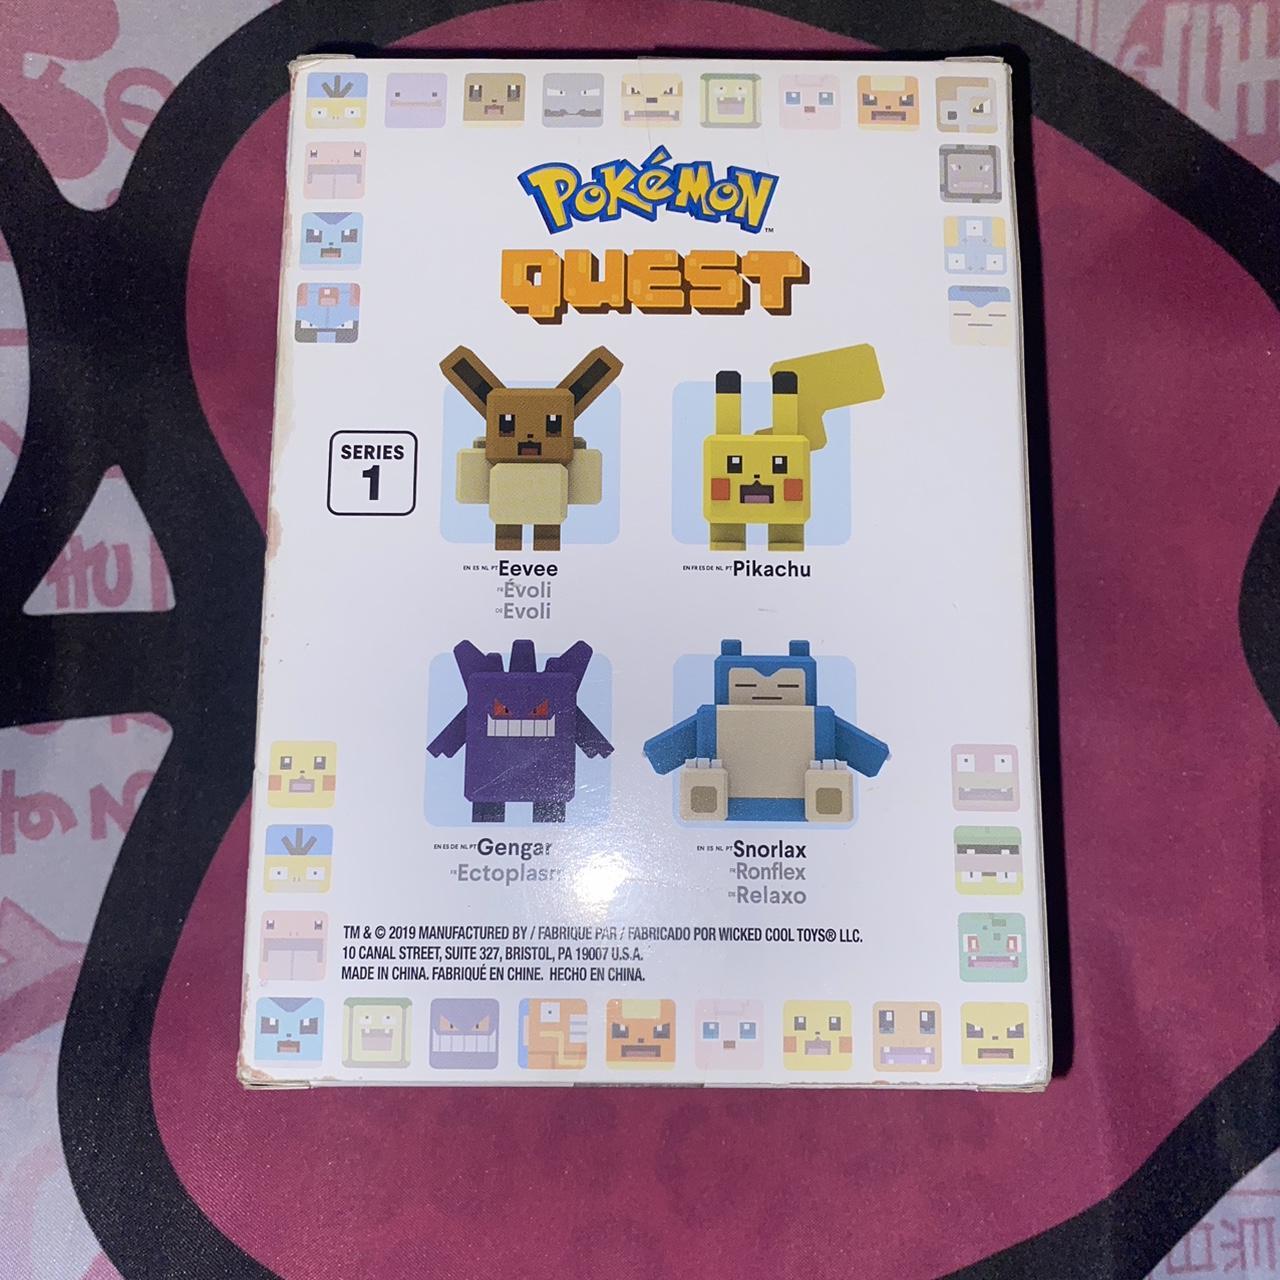 Pokemon Quest Eevee Evoli Vinyl Figure Series 1